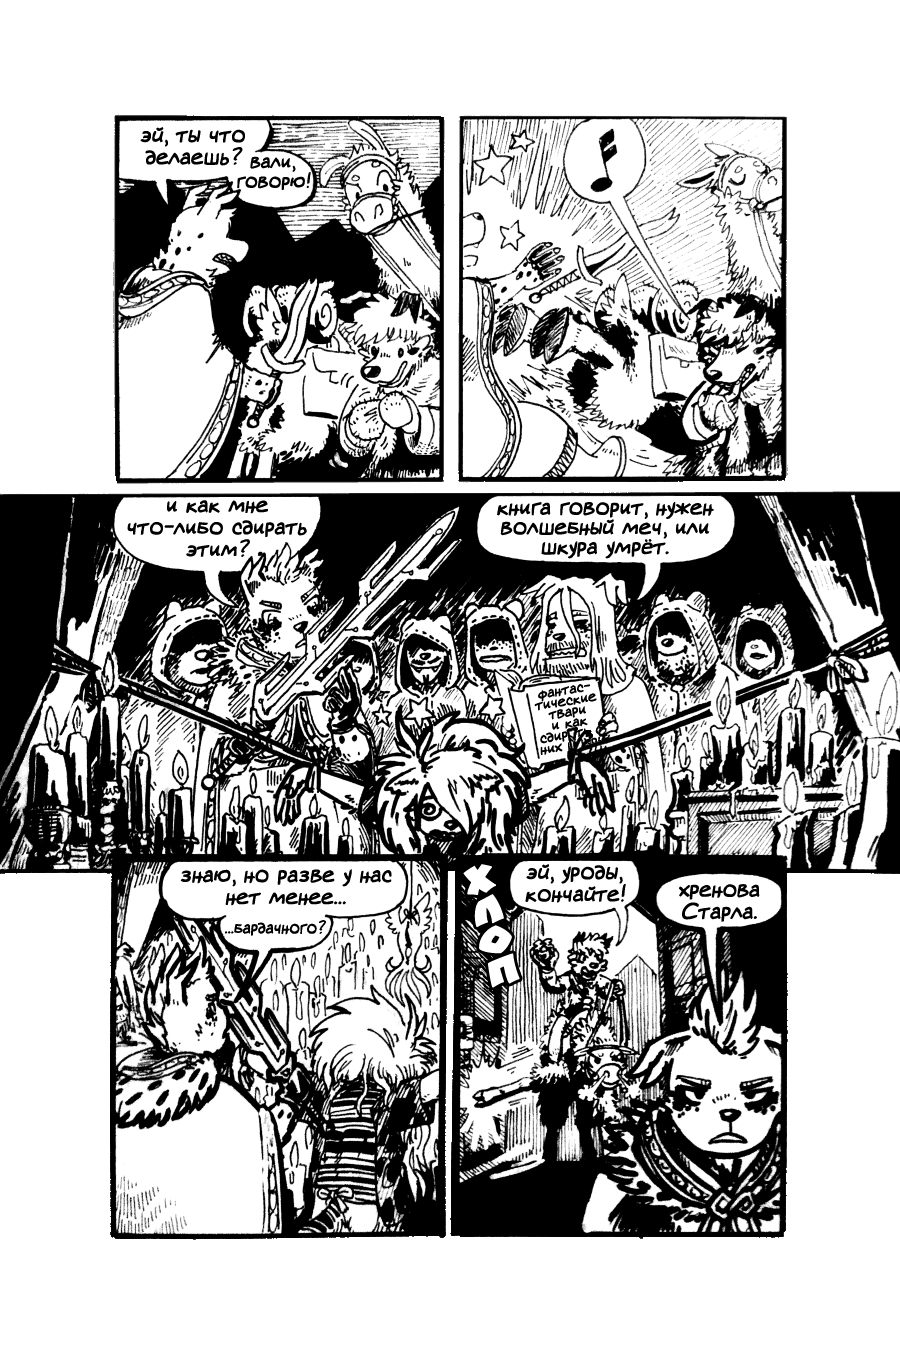 Комикс Беспризорное Царство [Latchkey Kingdom]: выпуск №426